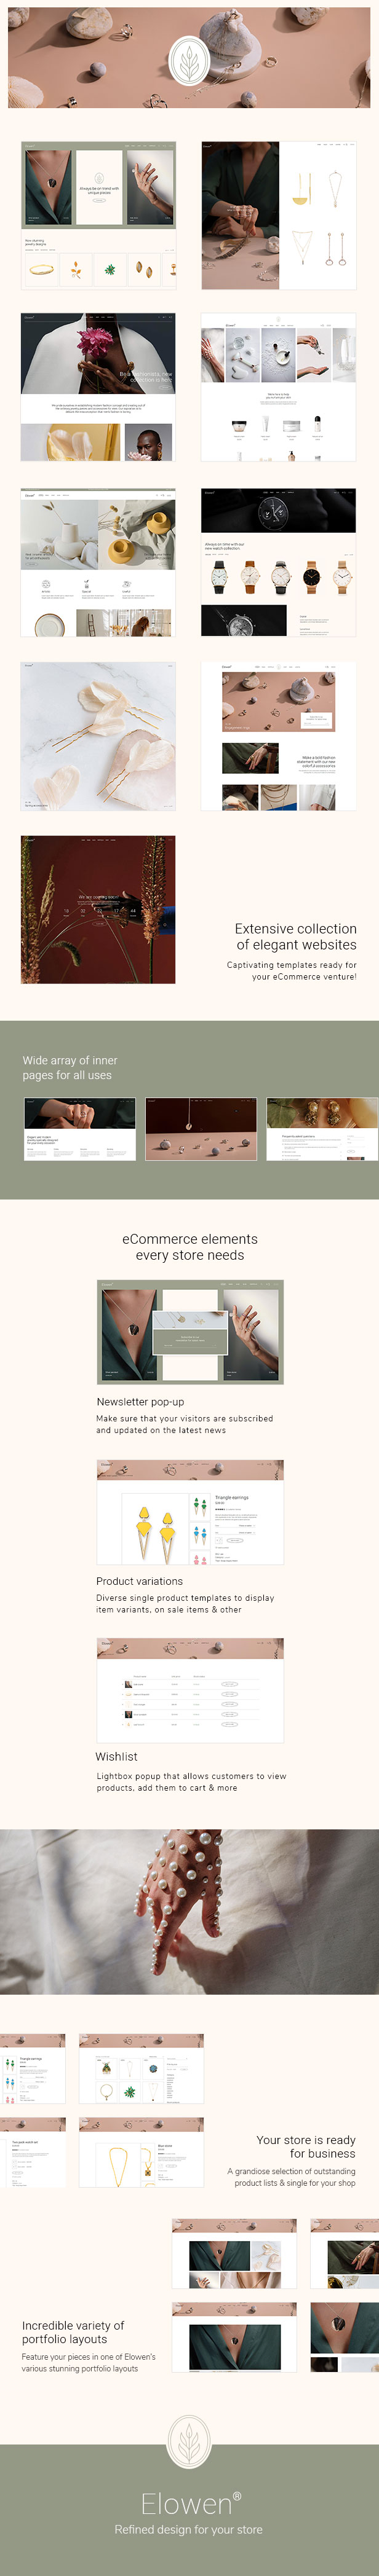 Elowen - Elegant eCommerce Theme - 3